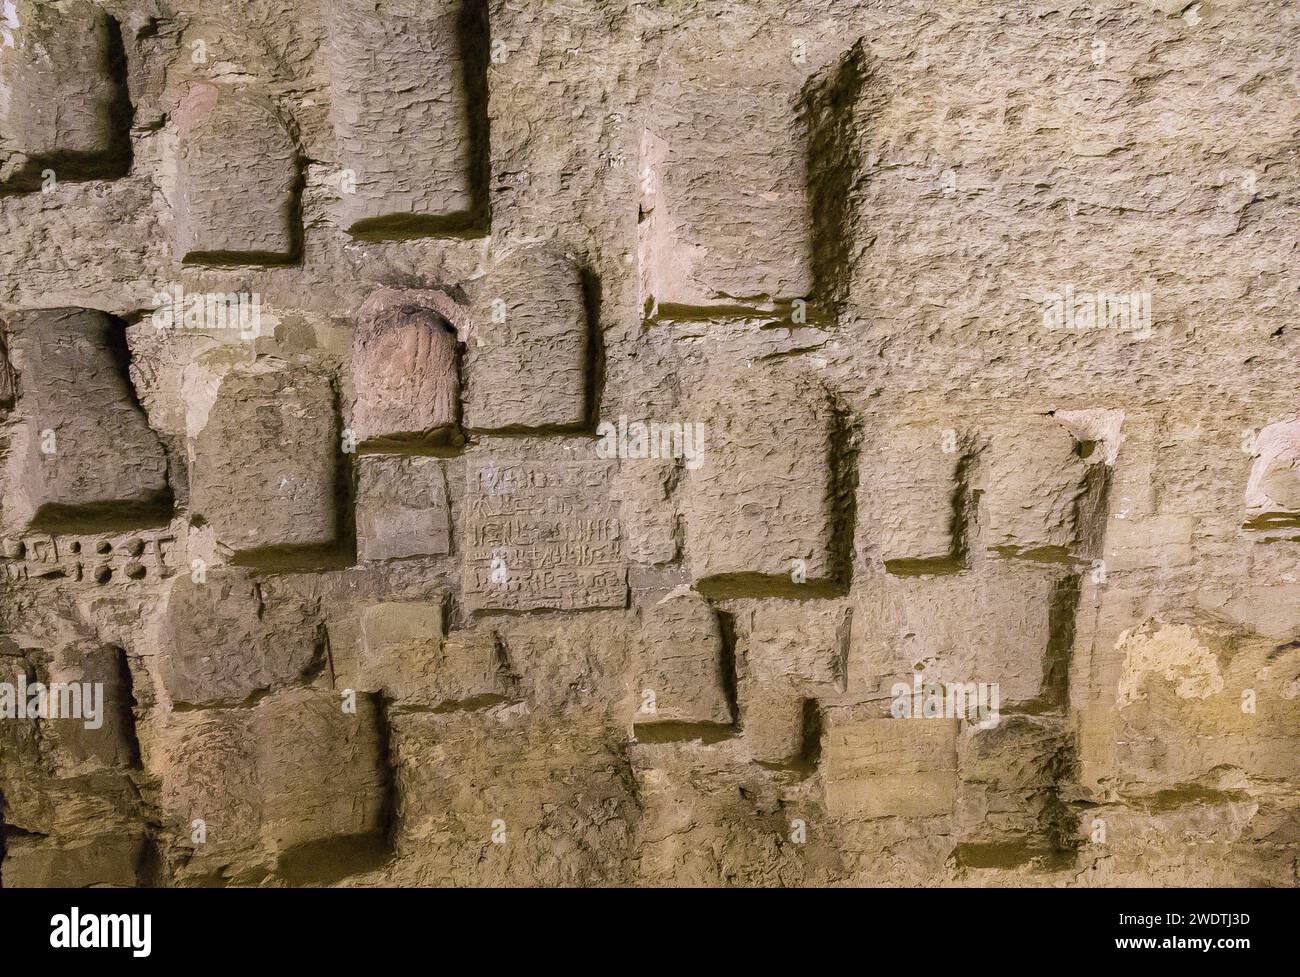 Egypt, Saqqara, Serapeum necropolis : Dedication texts and niches for steles. Stock Photo